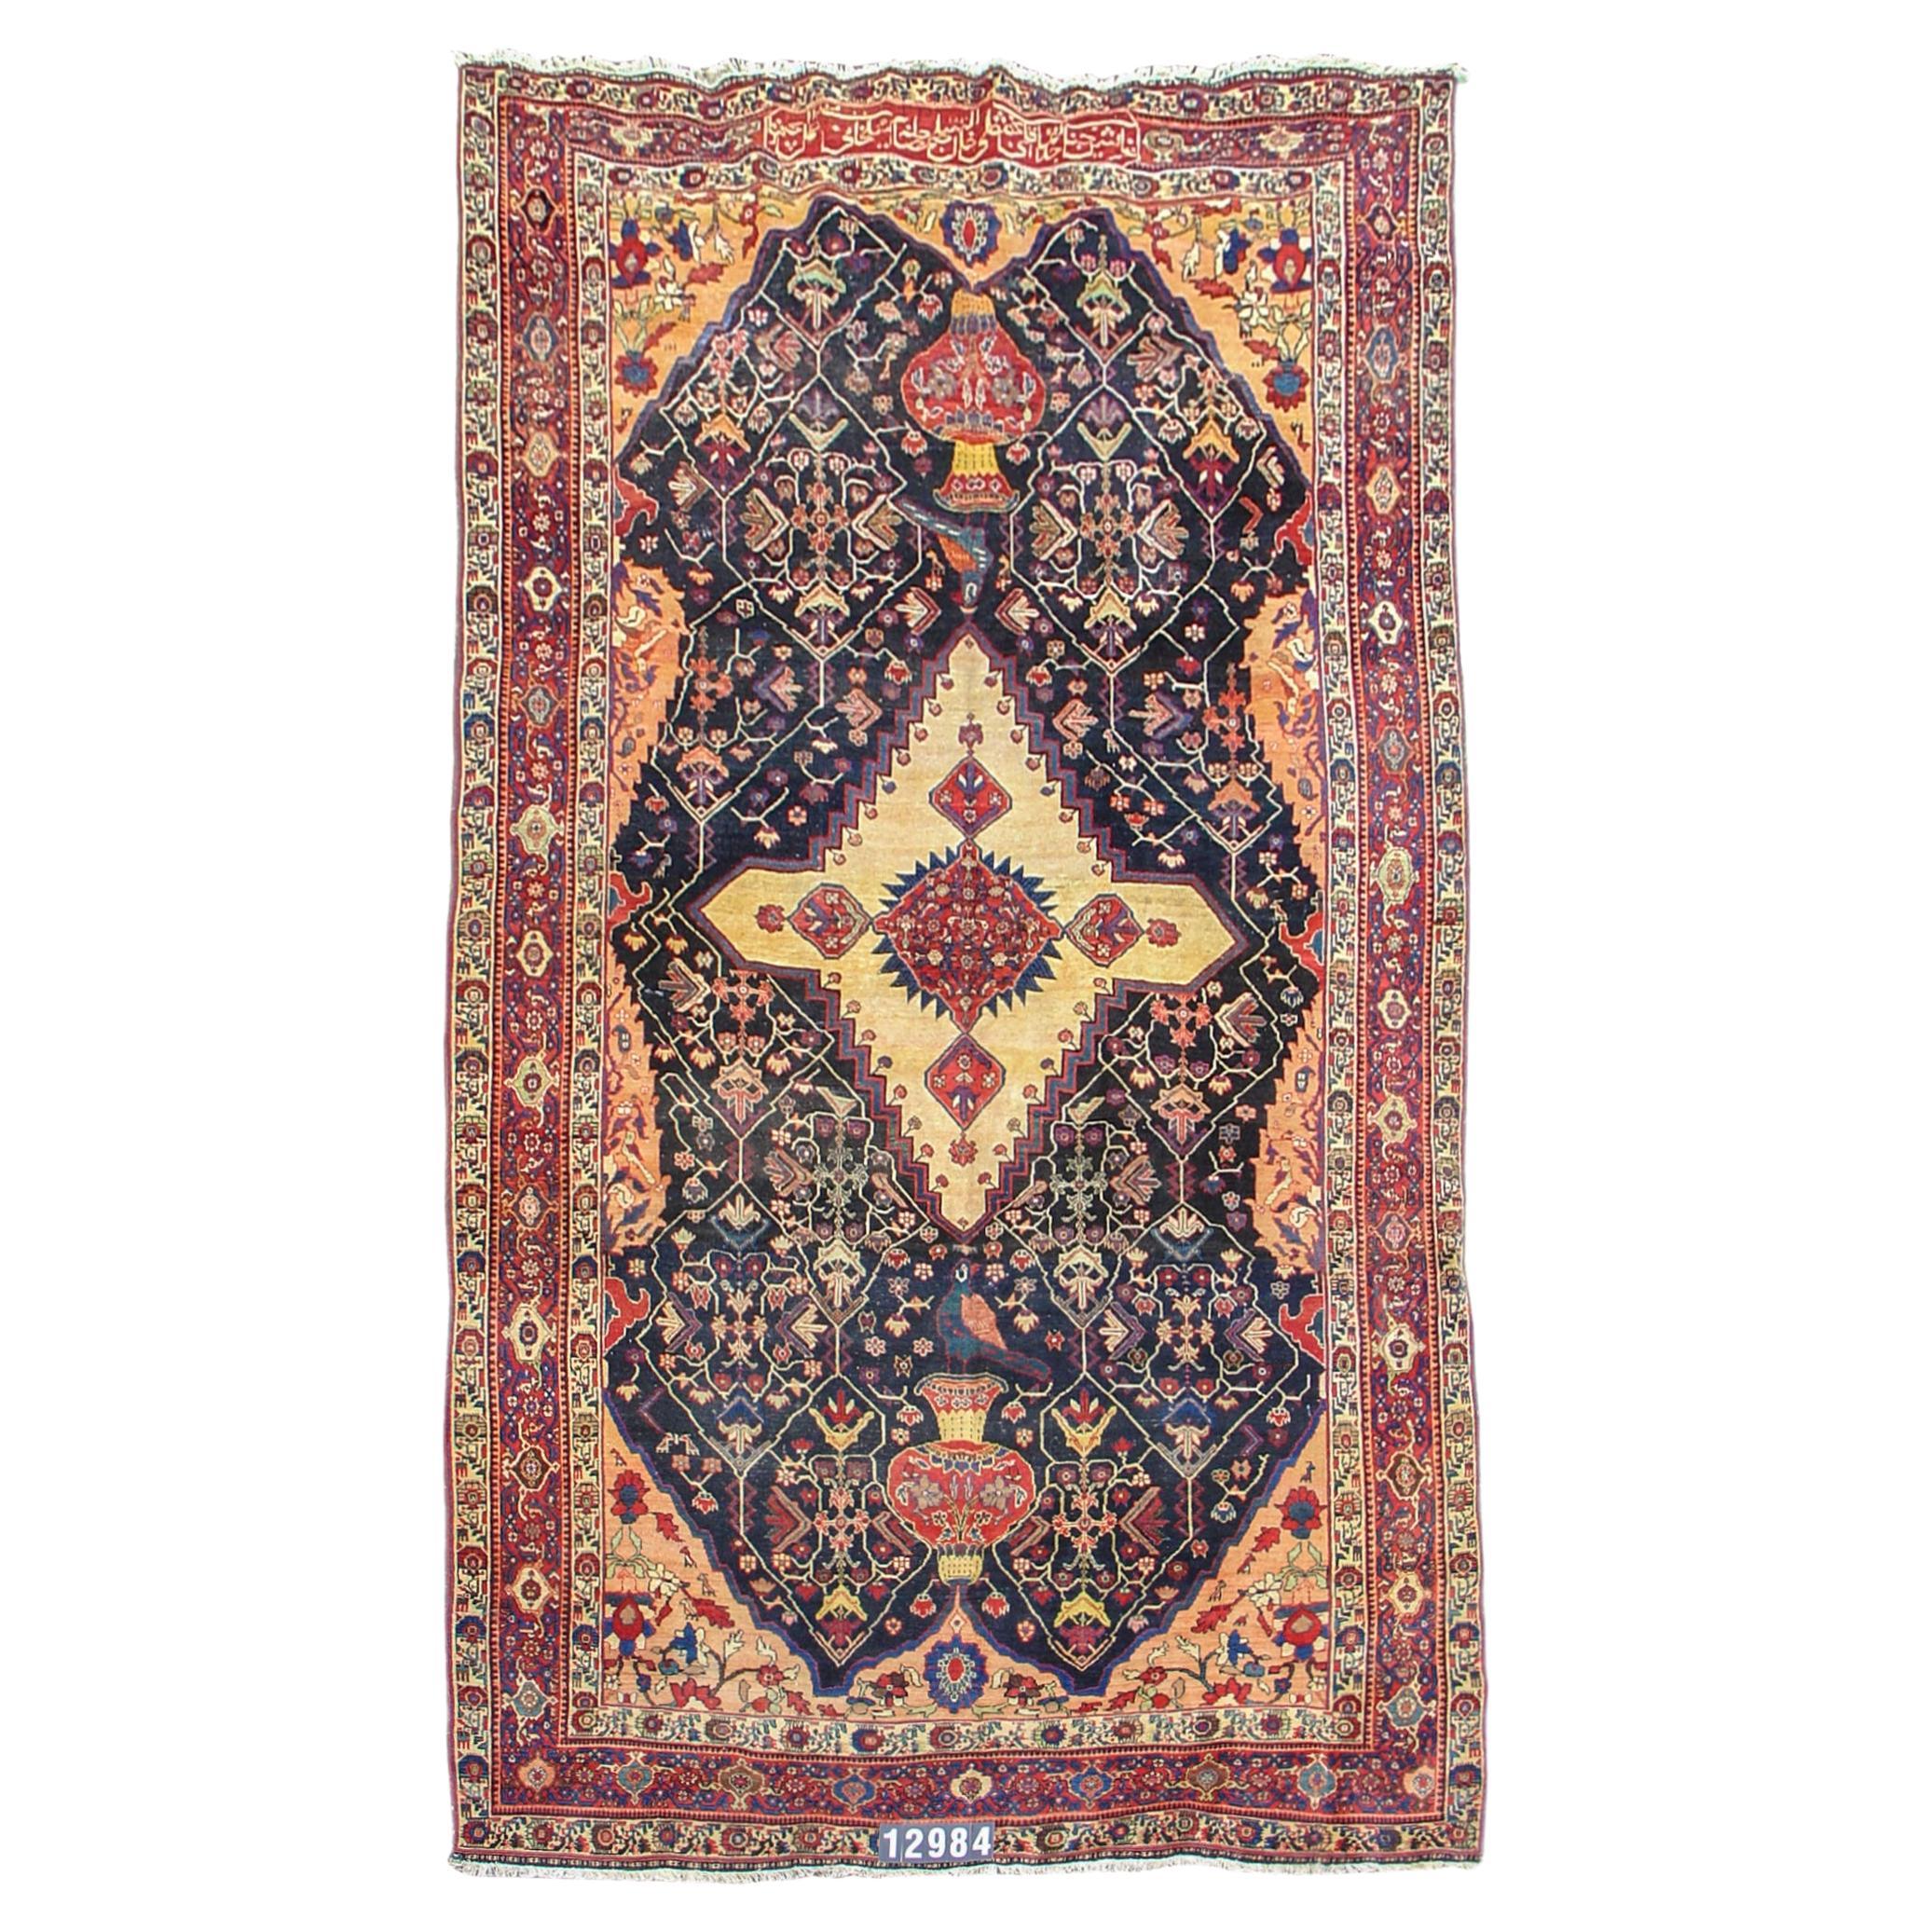 Antique Persian Bakhtiari Carpet Rug, Early 20th Century